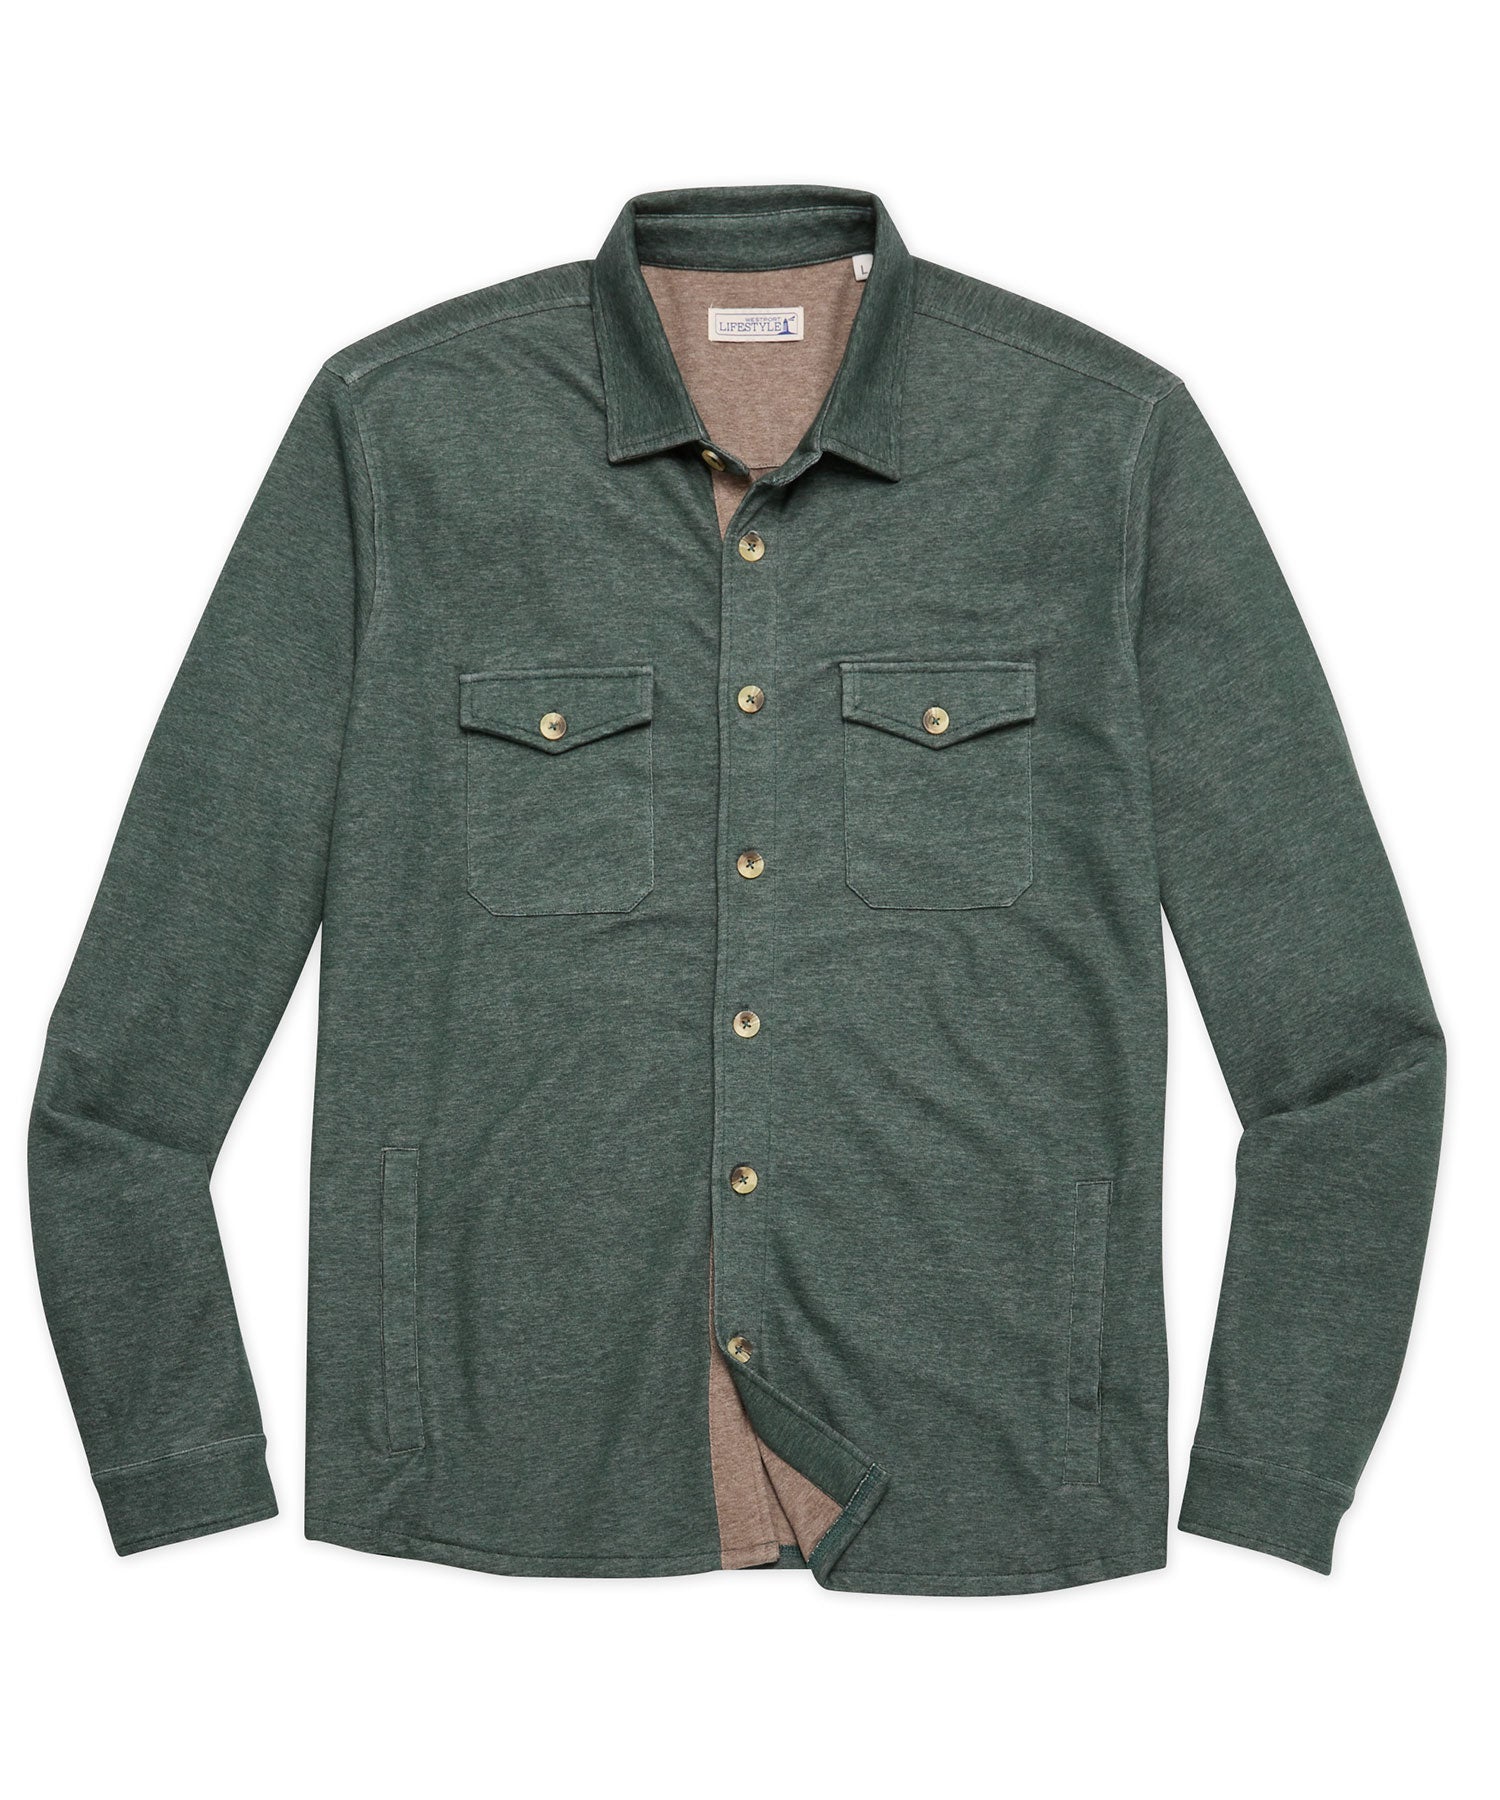 Westport Lifestyle Soft Cotton-Blend Overshirt